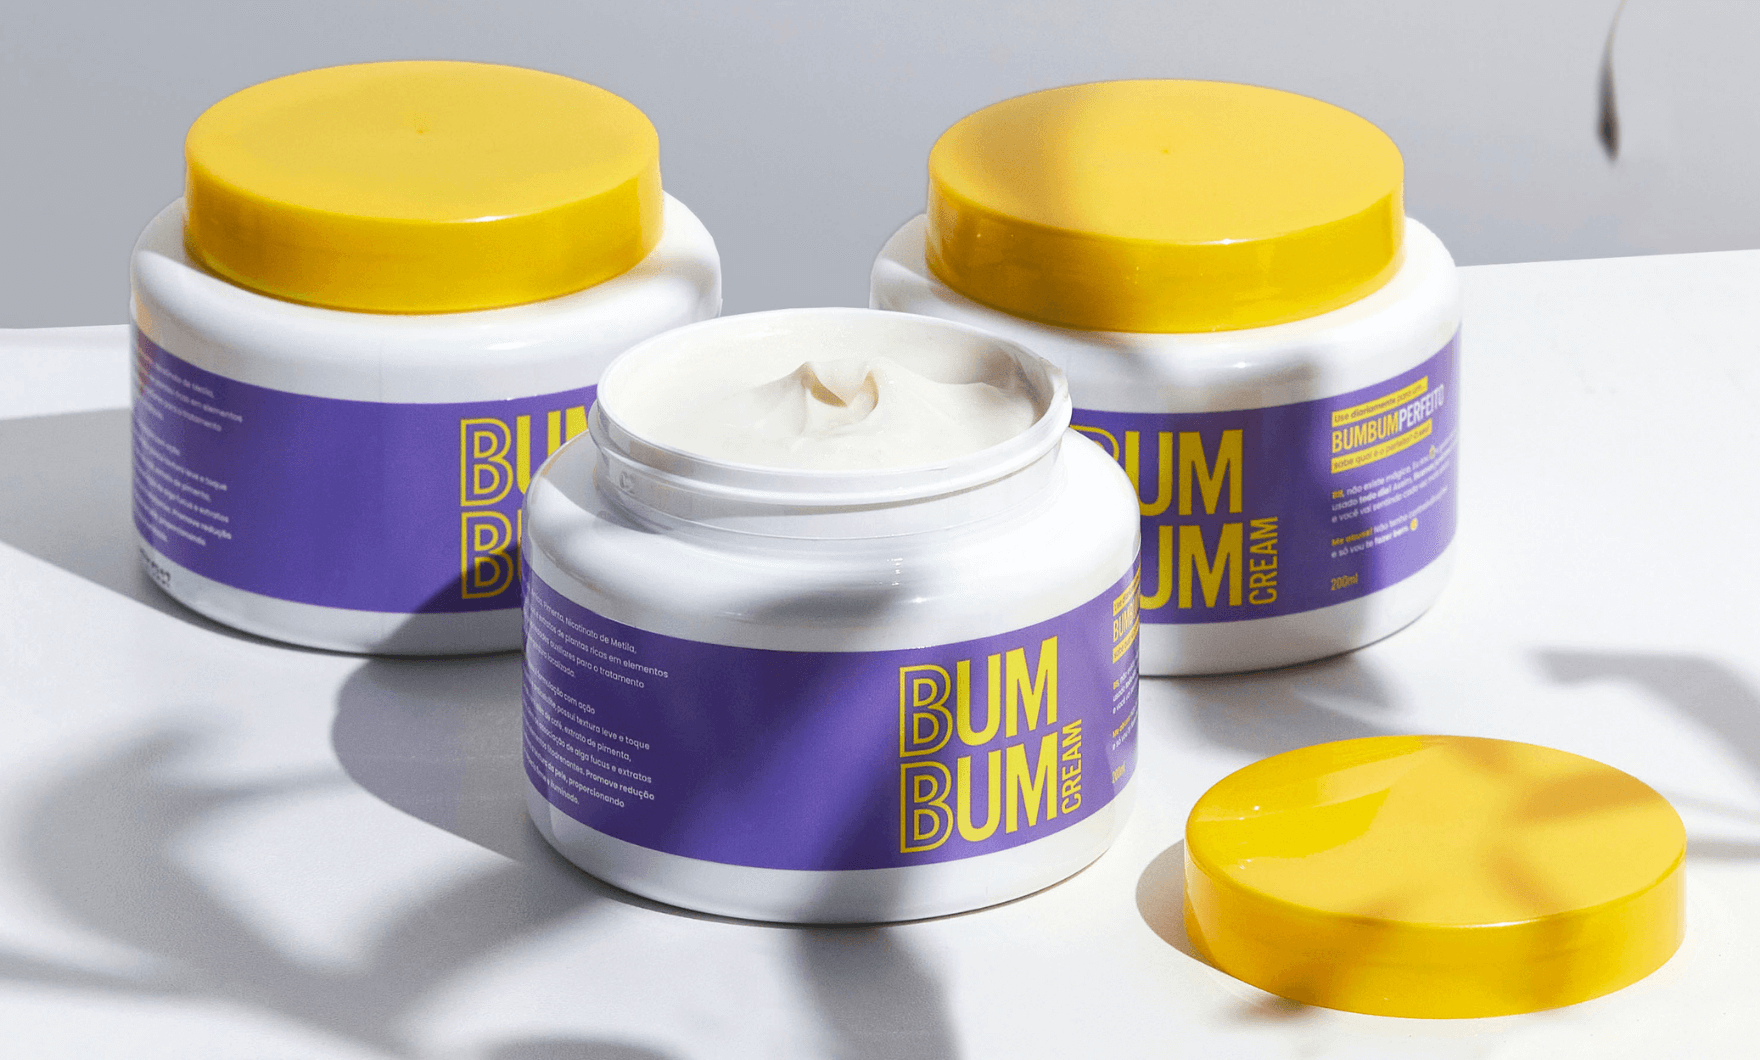 Bumbum Cream - creme redutor de medidas